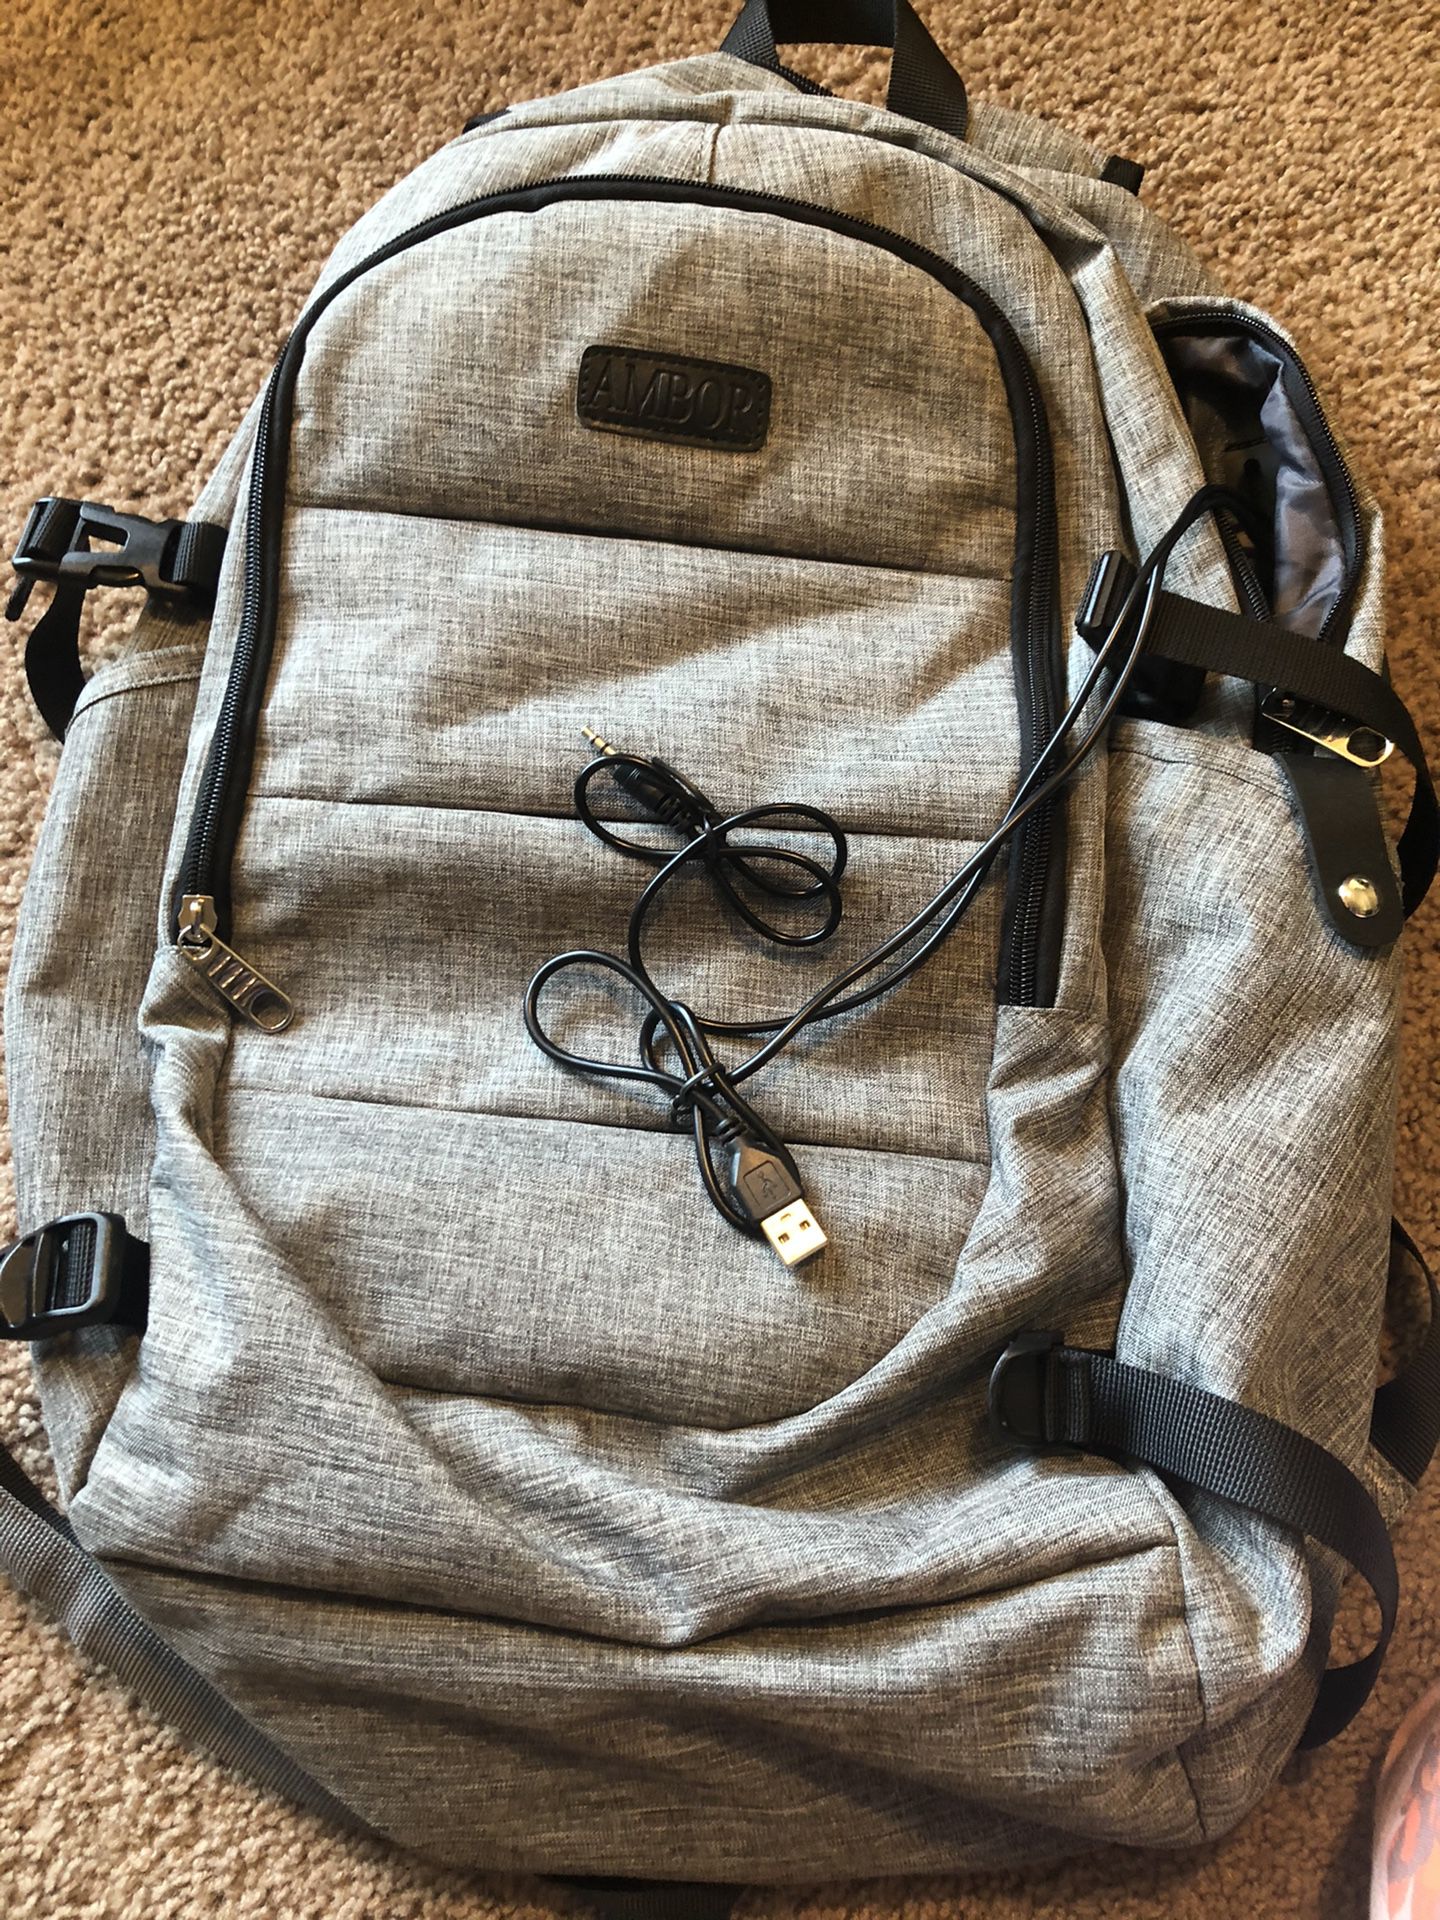 Backpack with external USB port, headphone jack